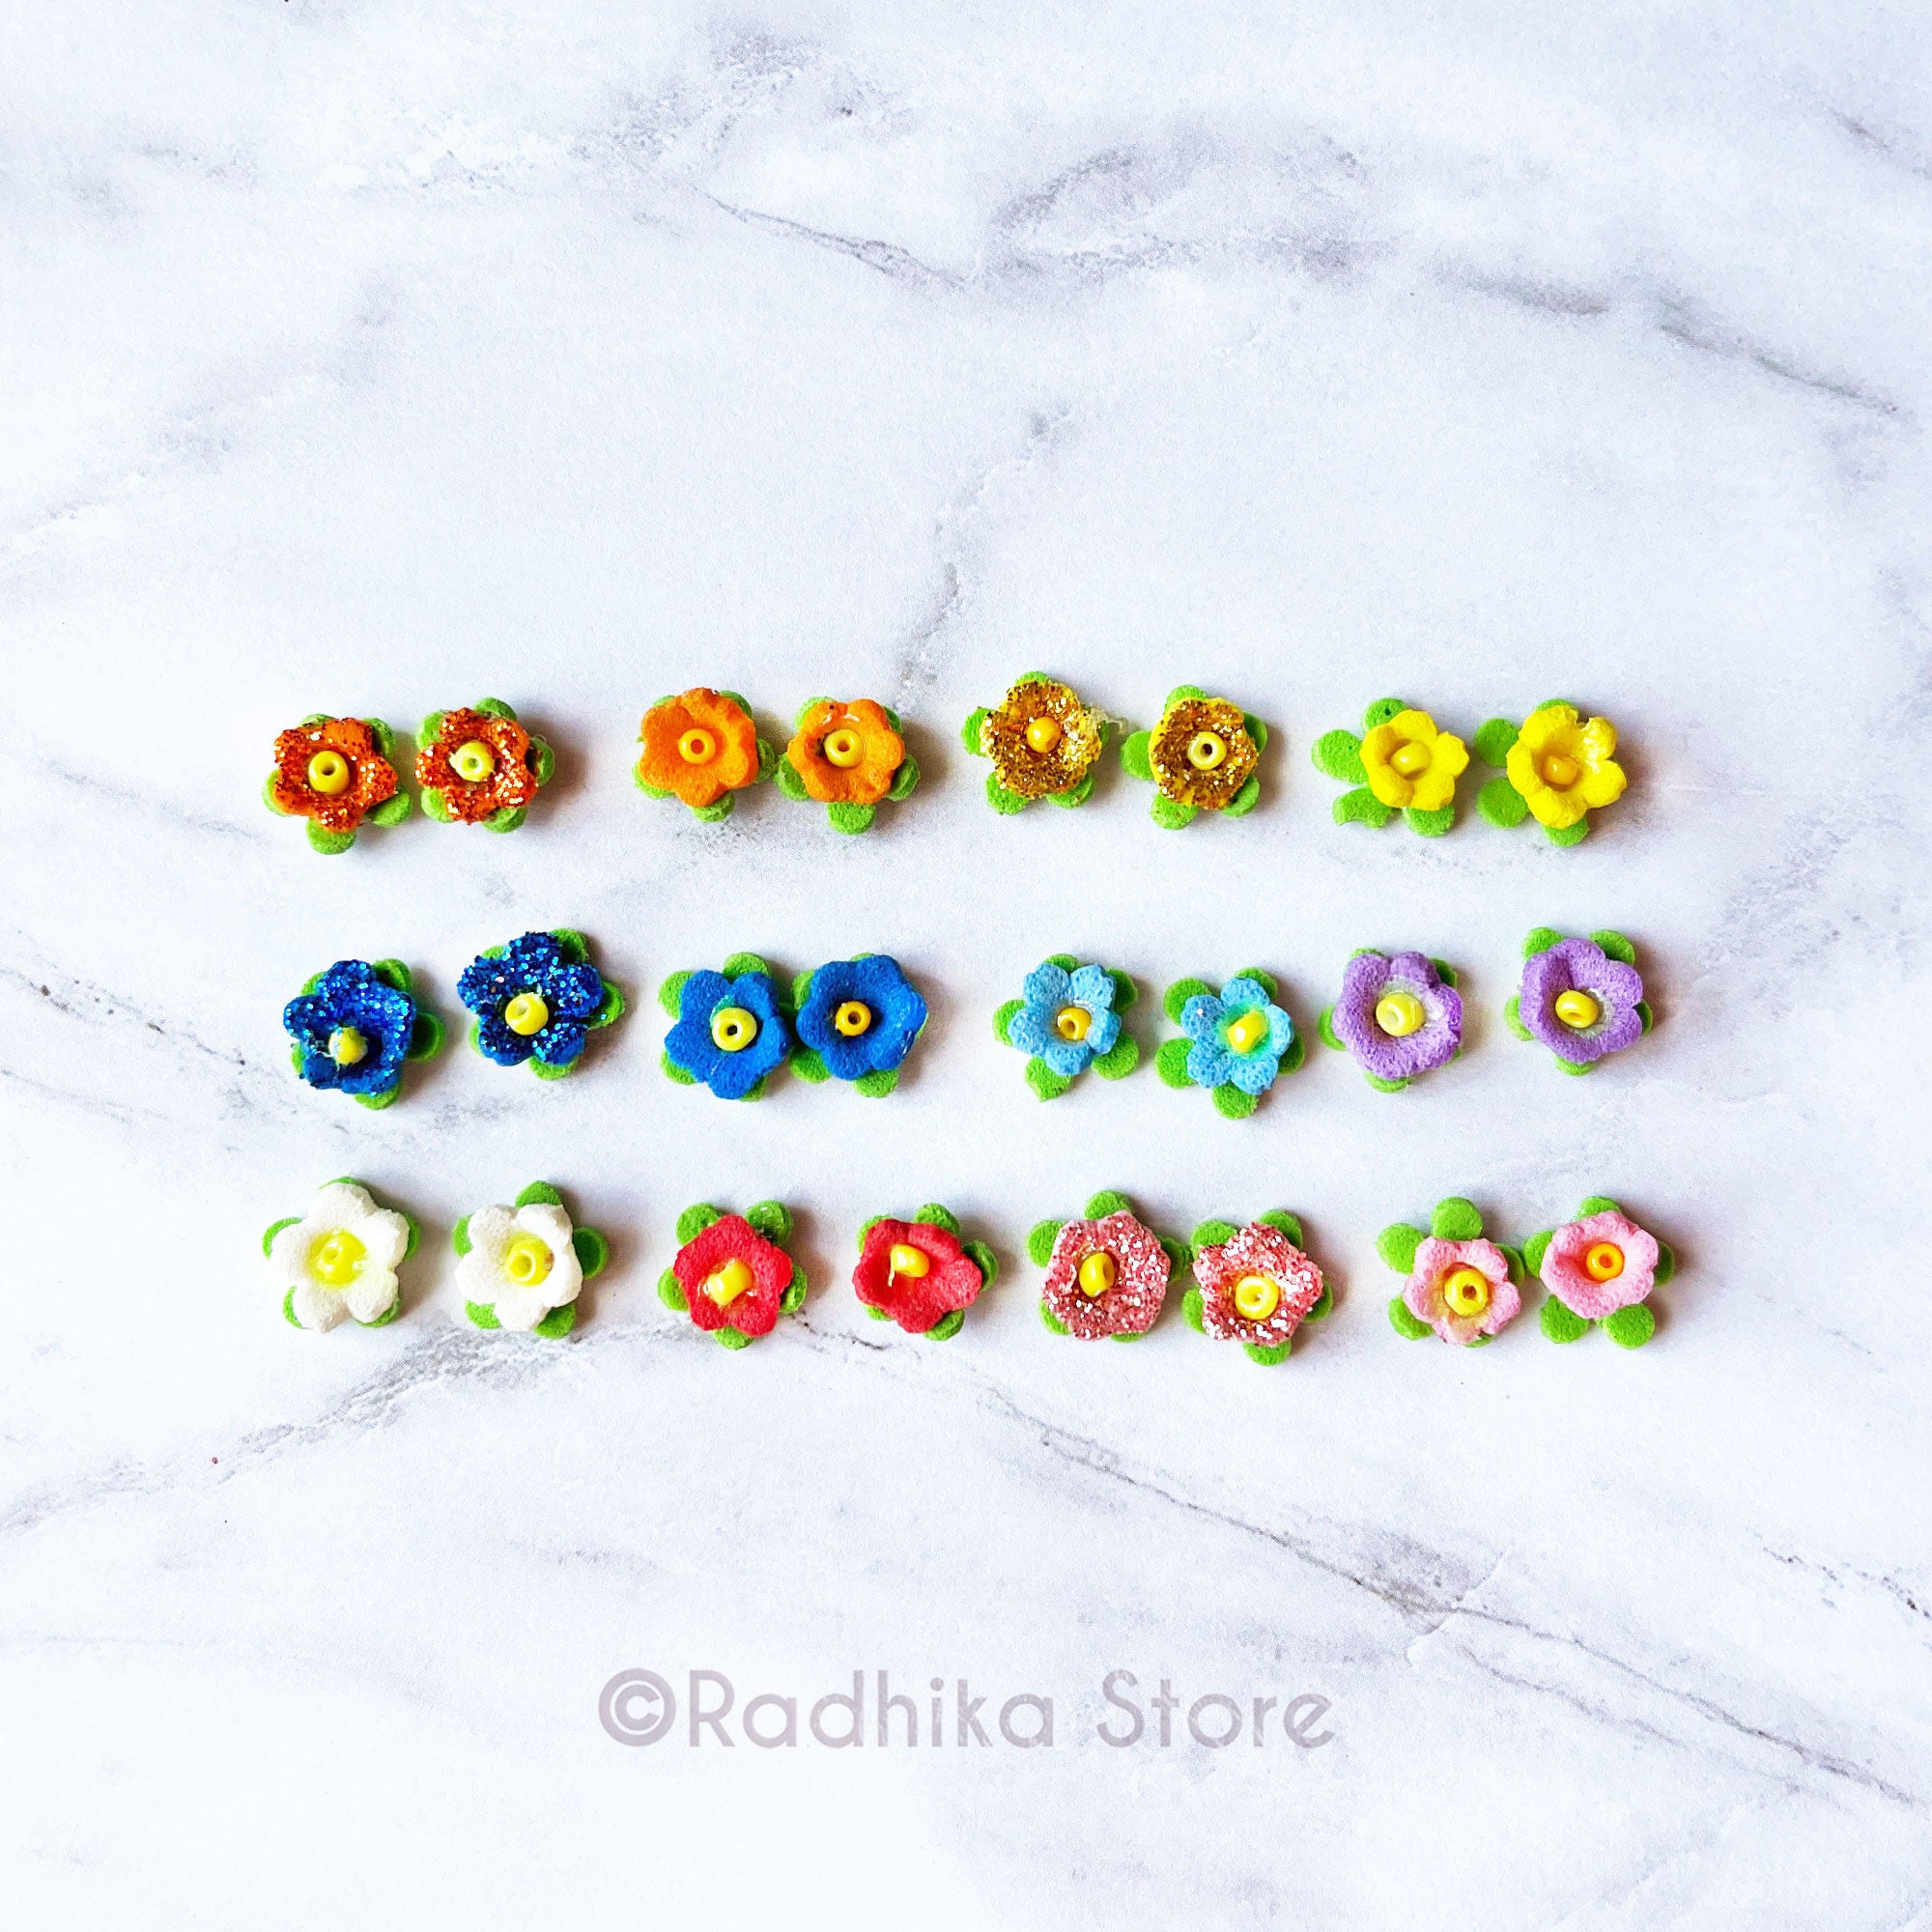 Tiny Vrindavan Flower Earrings - Choose Color